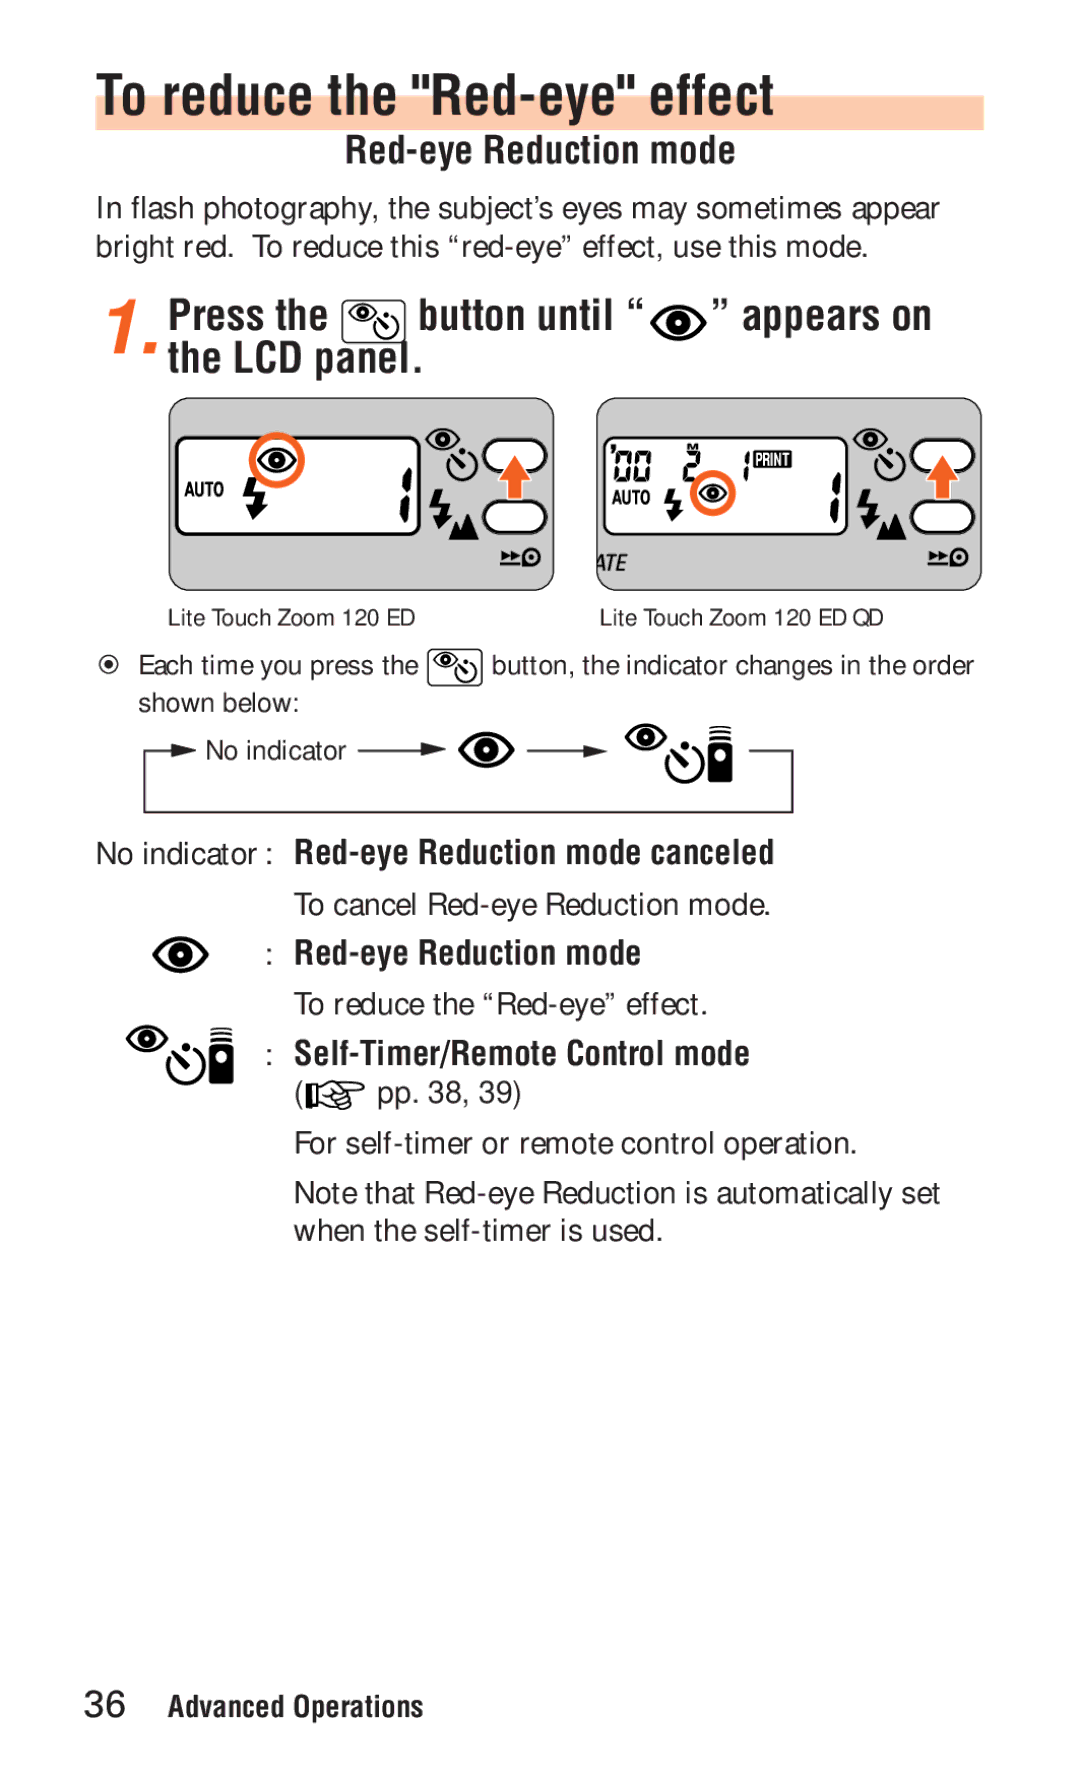 Nikon ED 120 instruction manual To reduce the Red-eye effect, No indicator Red-eye Reduction mode canceled 